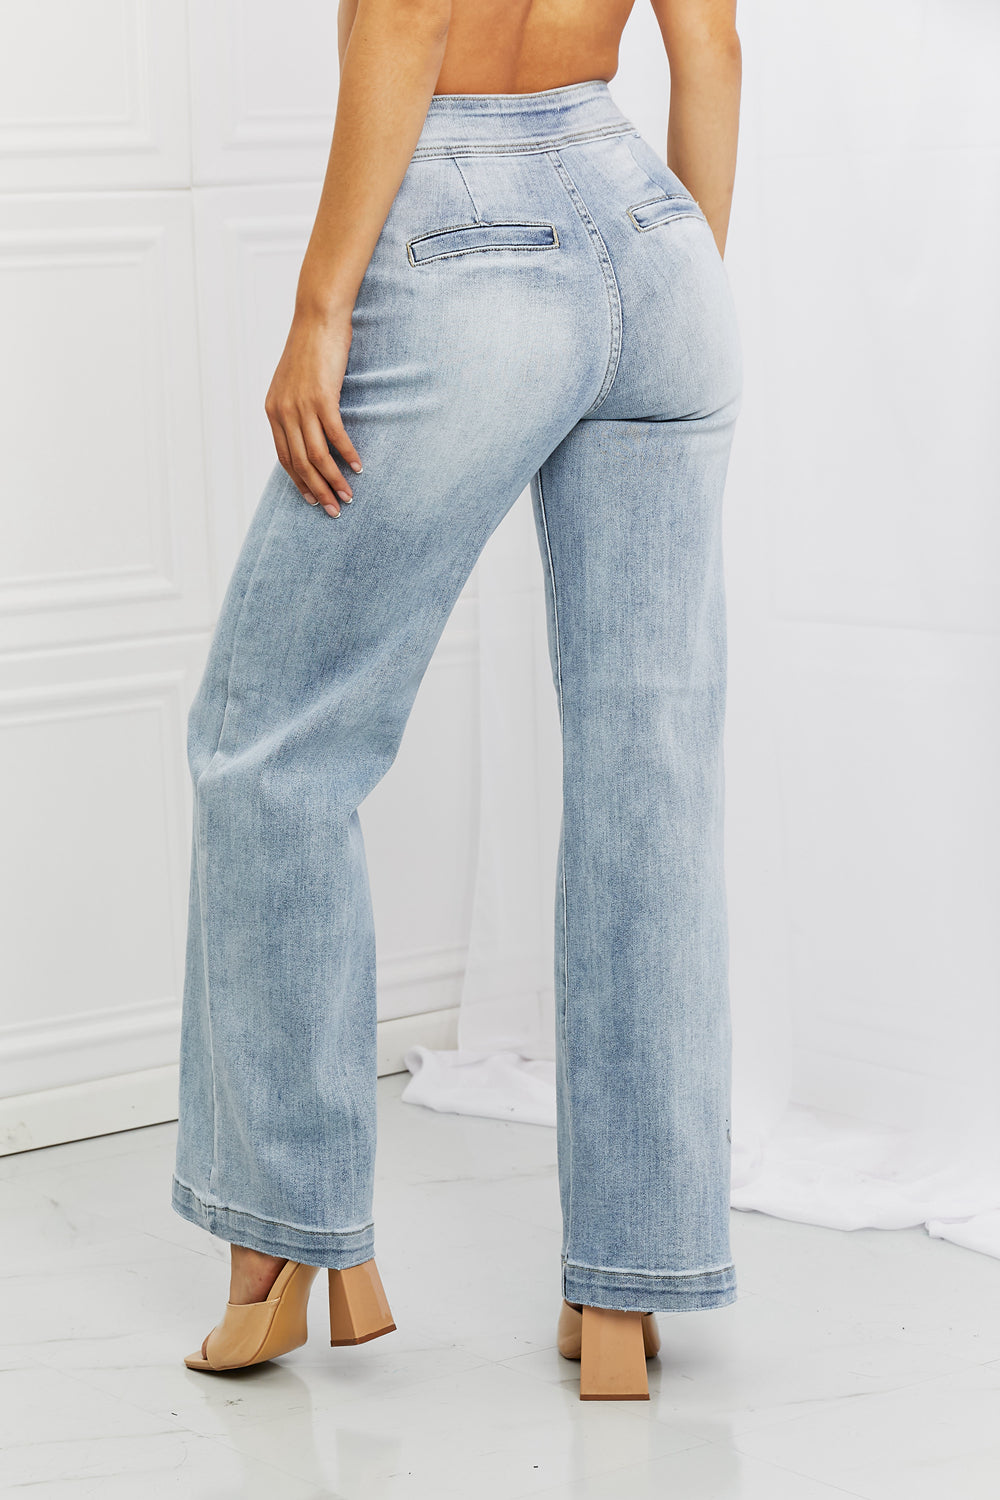 RISEN Full Size Luisa Wide Flare Jeans - The Fashion Unicorn